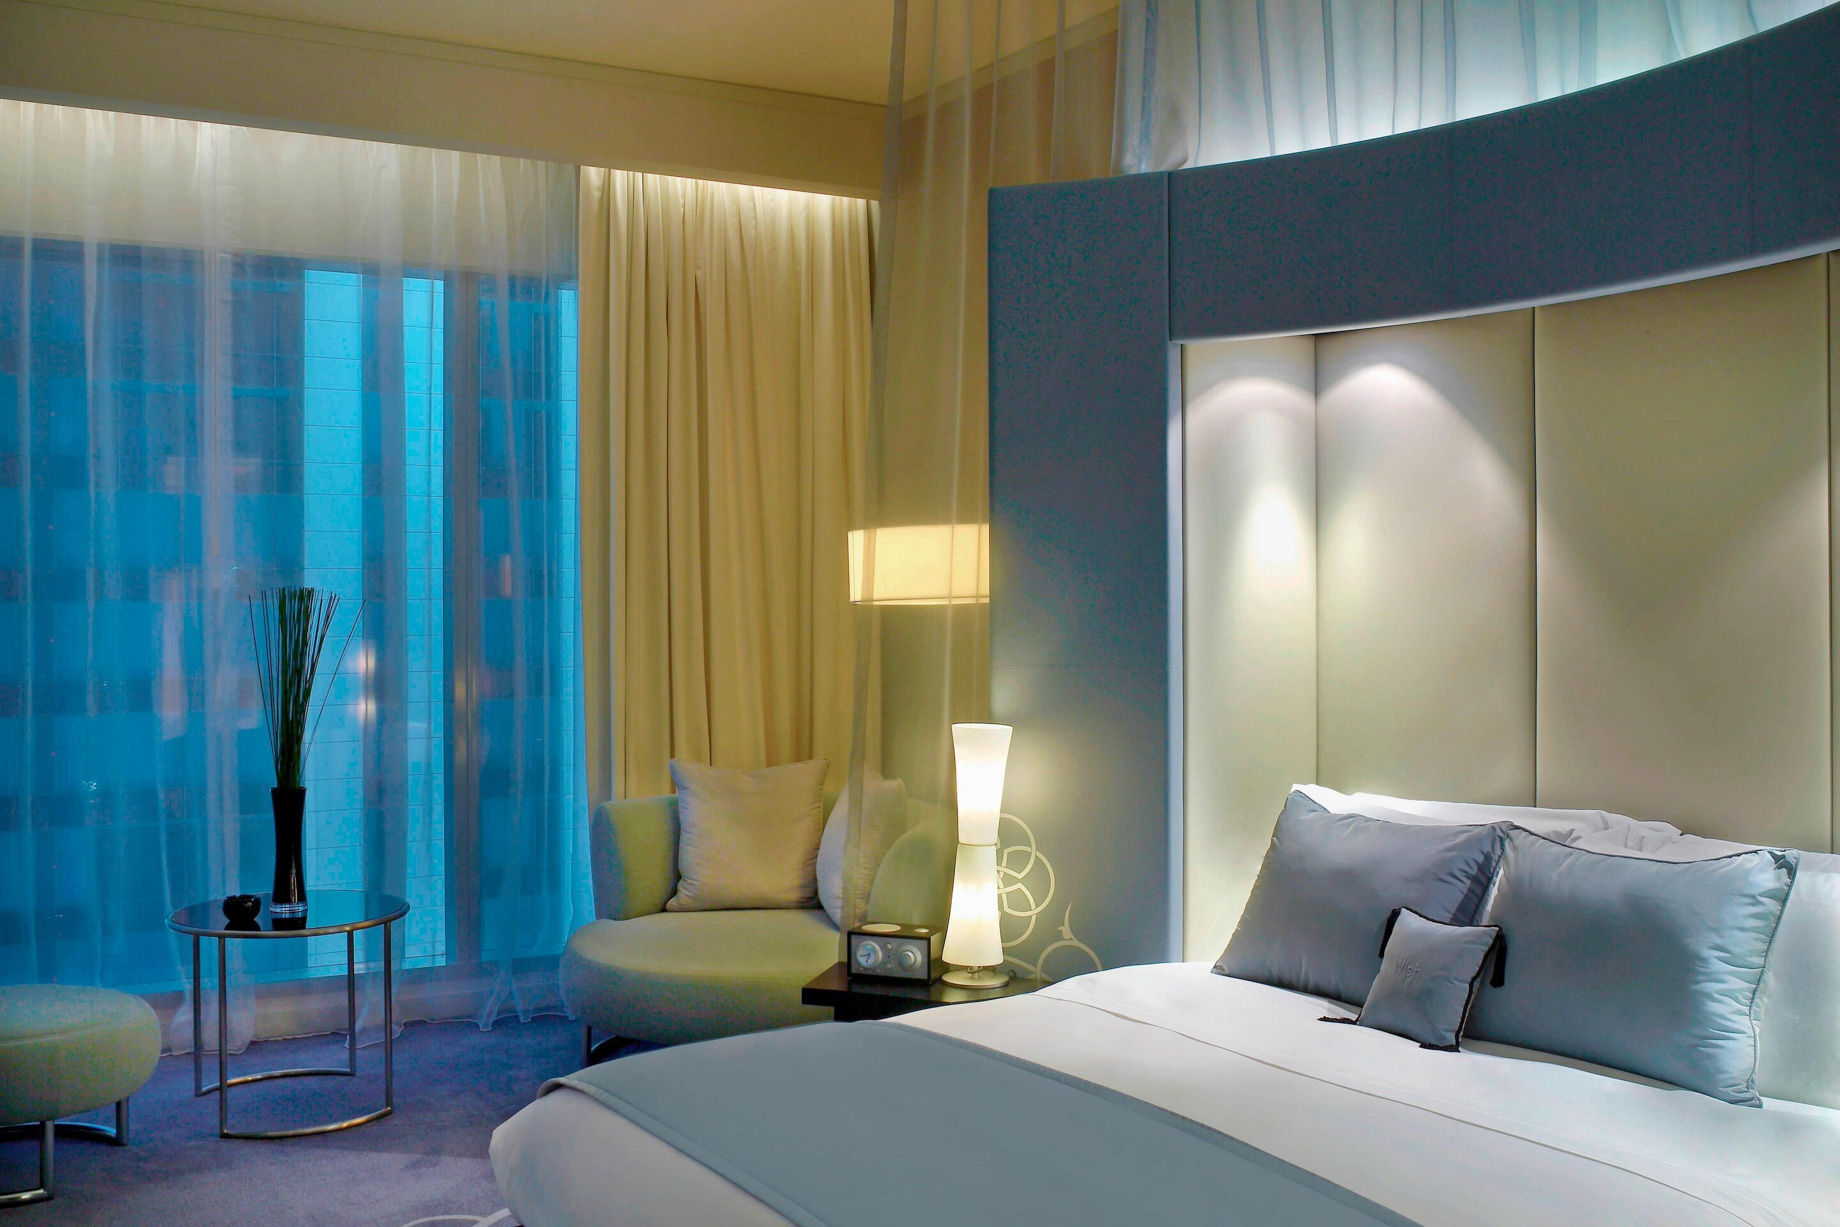 W Doha Hotel – Doha, Qatar – Marvelous Room